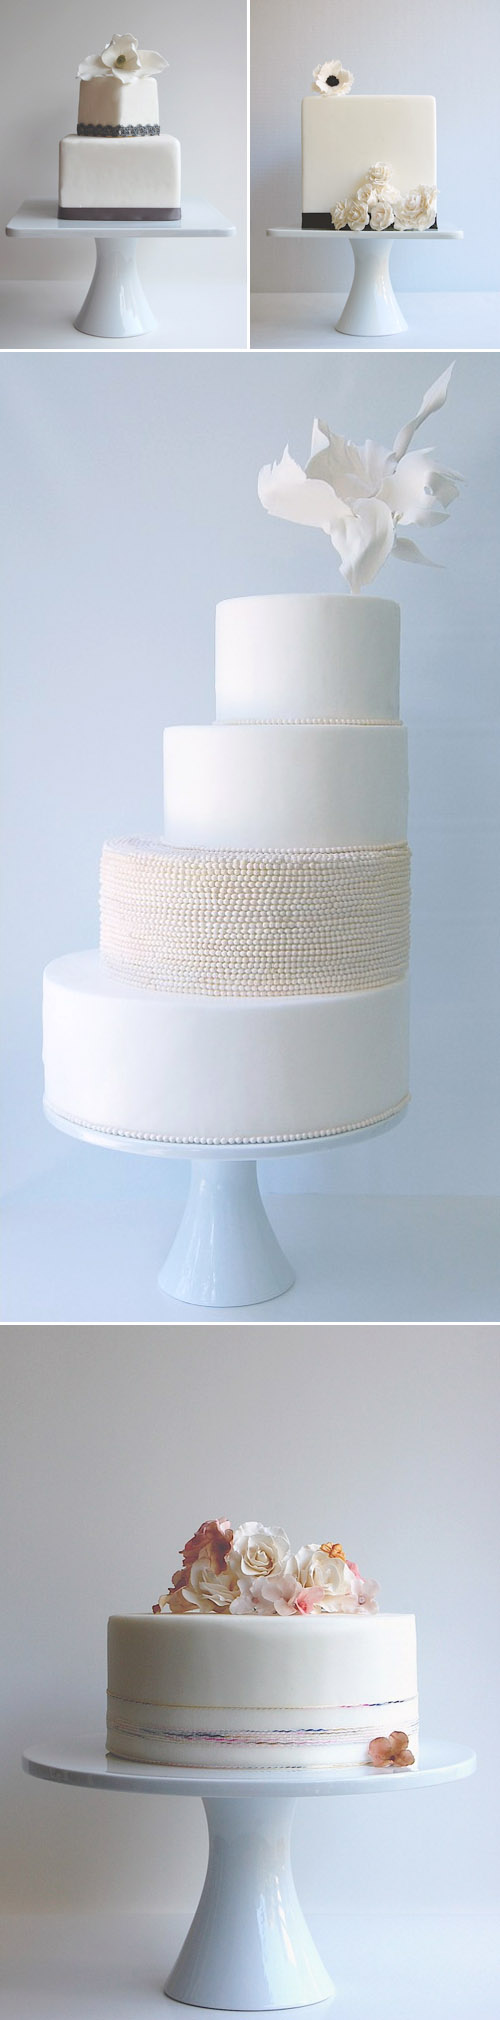 elegant, couture wedding cakes from Magpie's Cake, Washington, D.C.